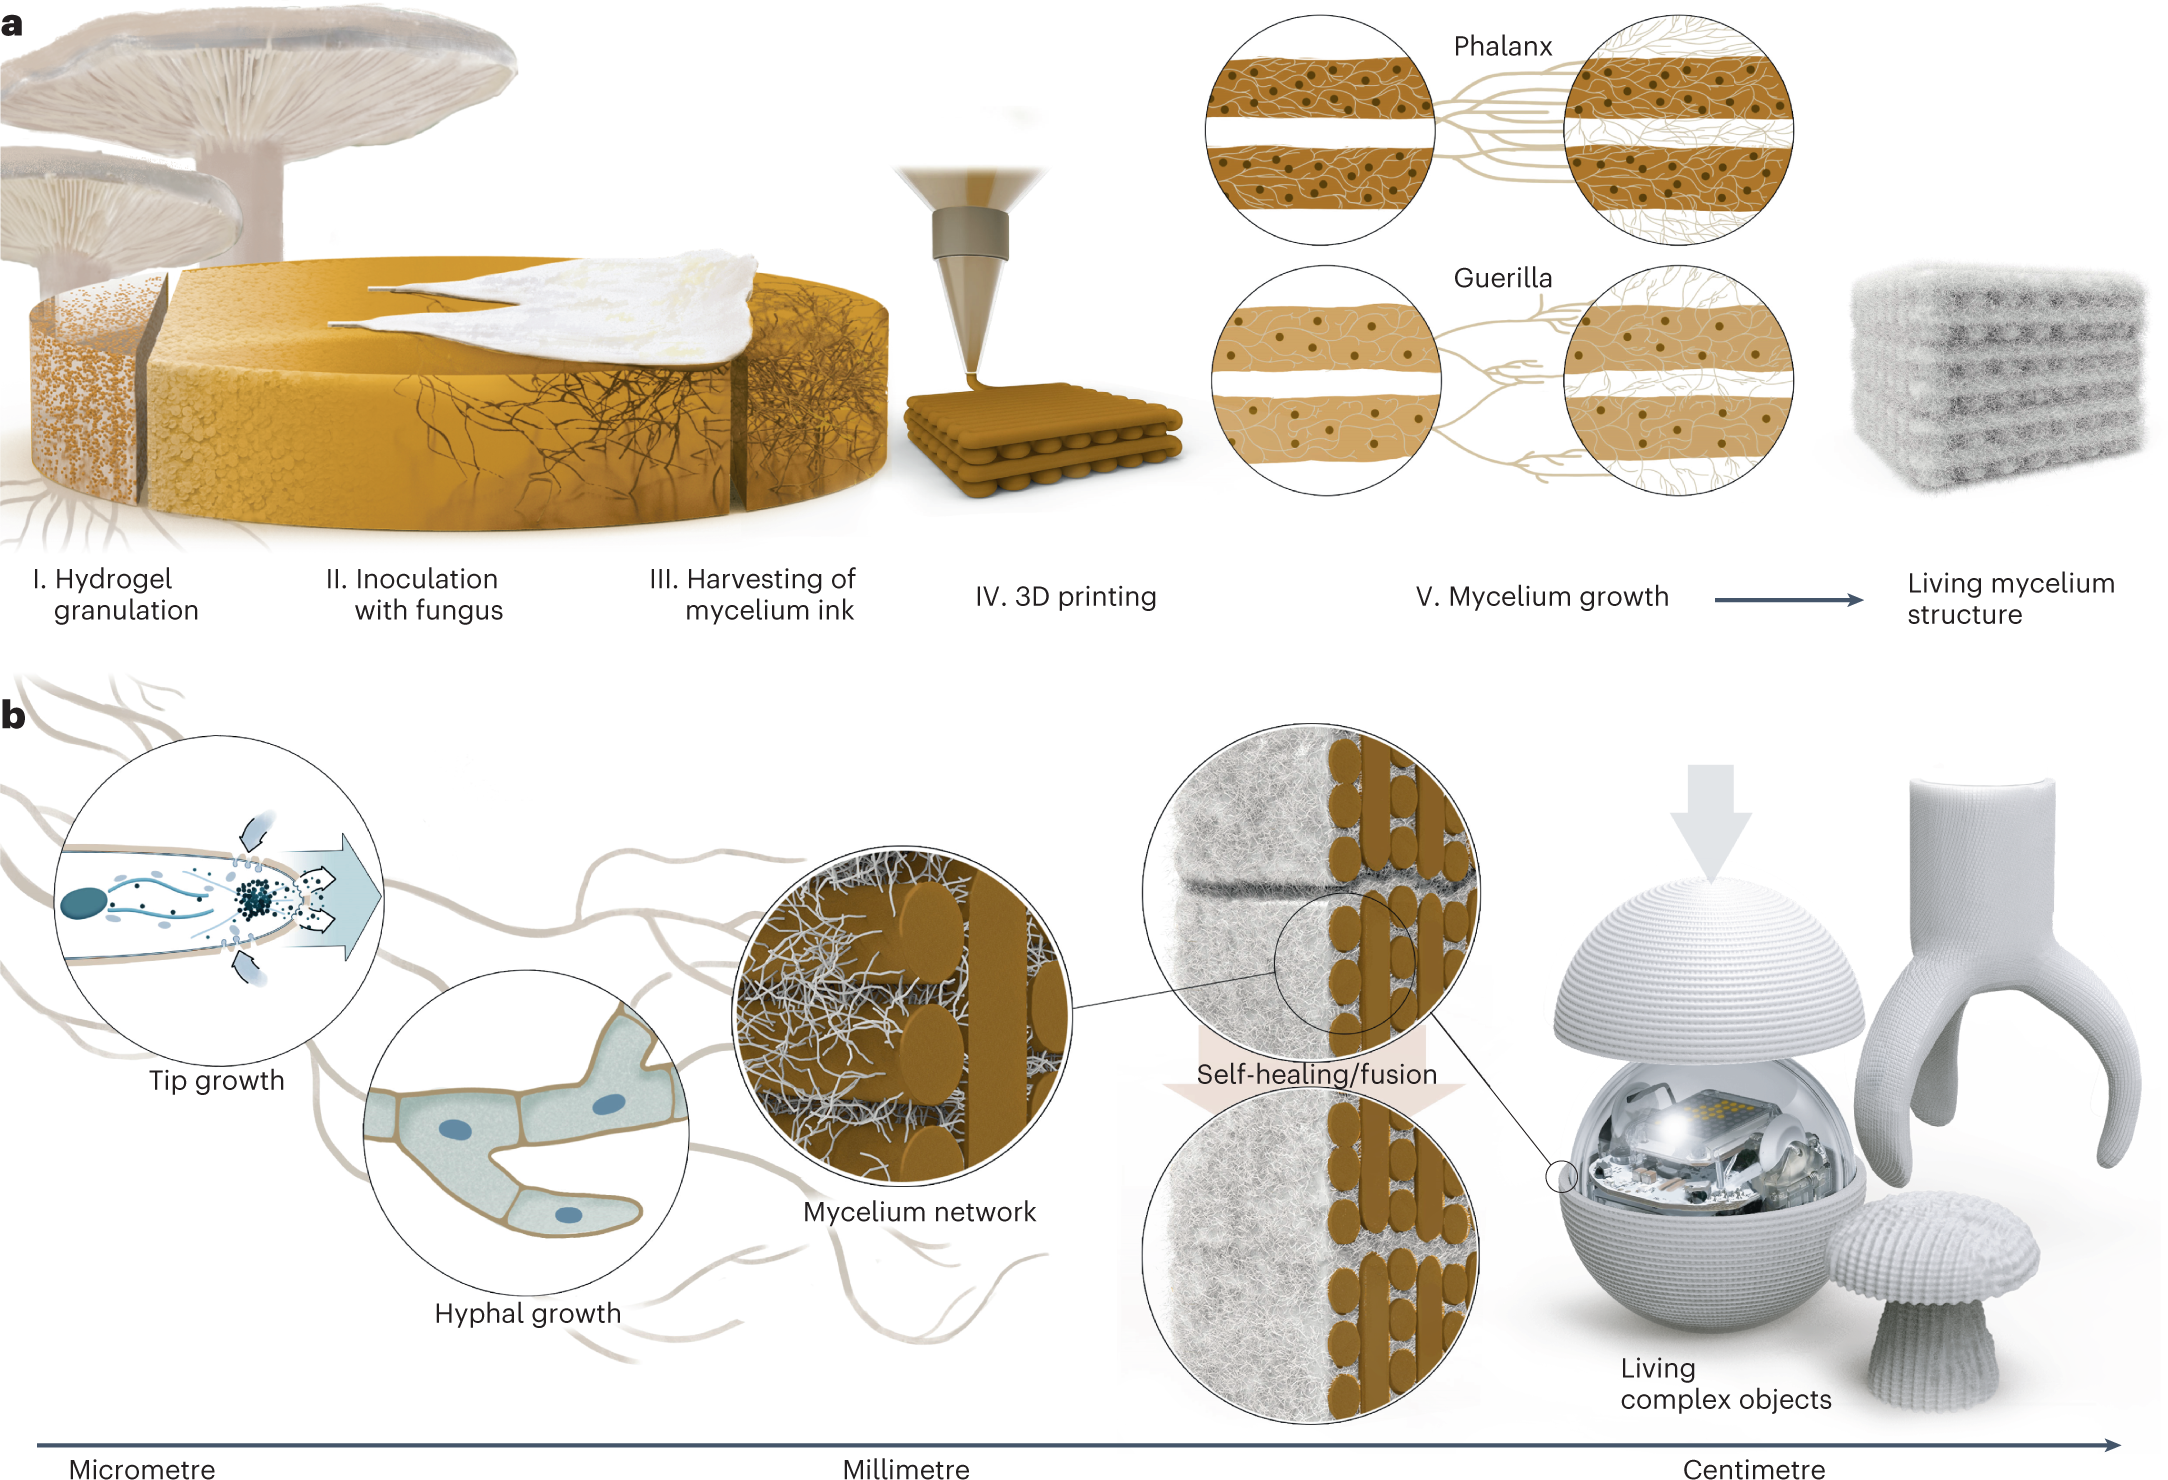 Three-dimensional printing of mycelium hydrogels into living